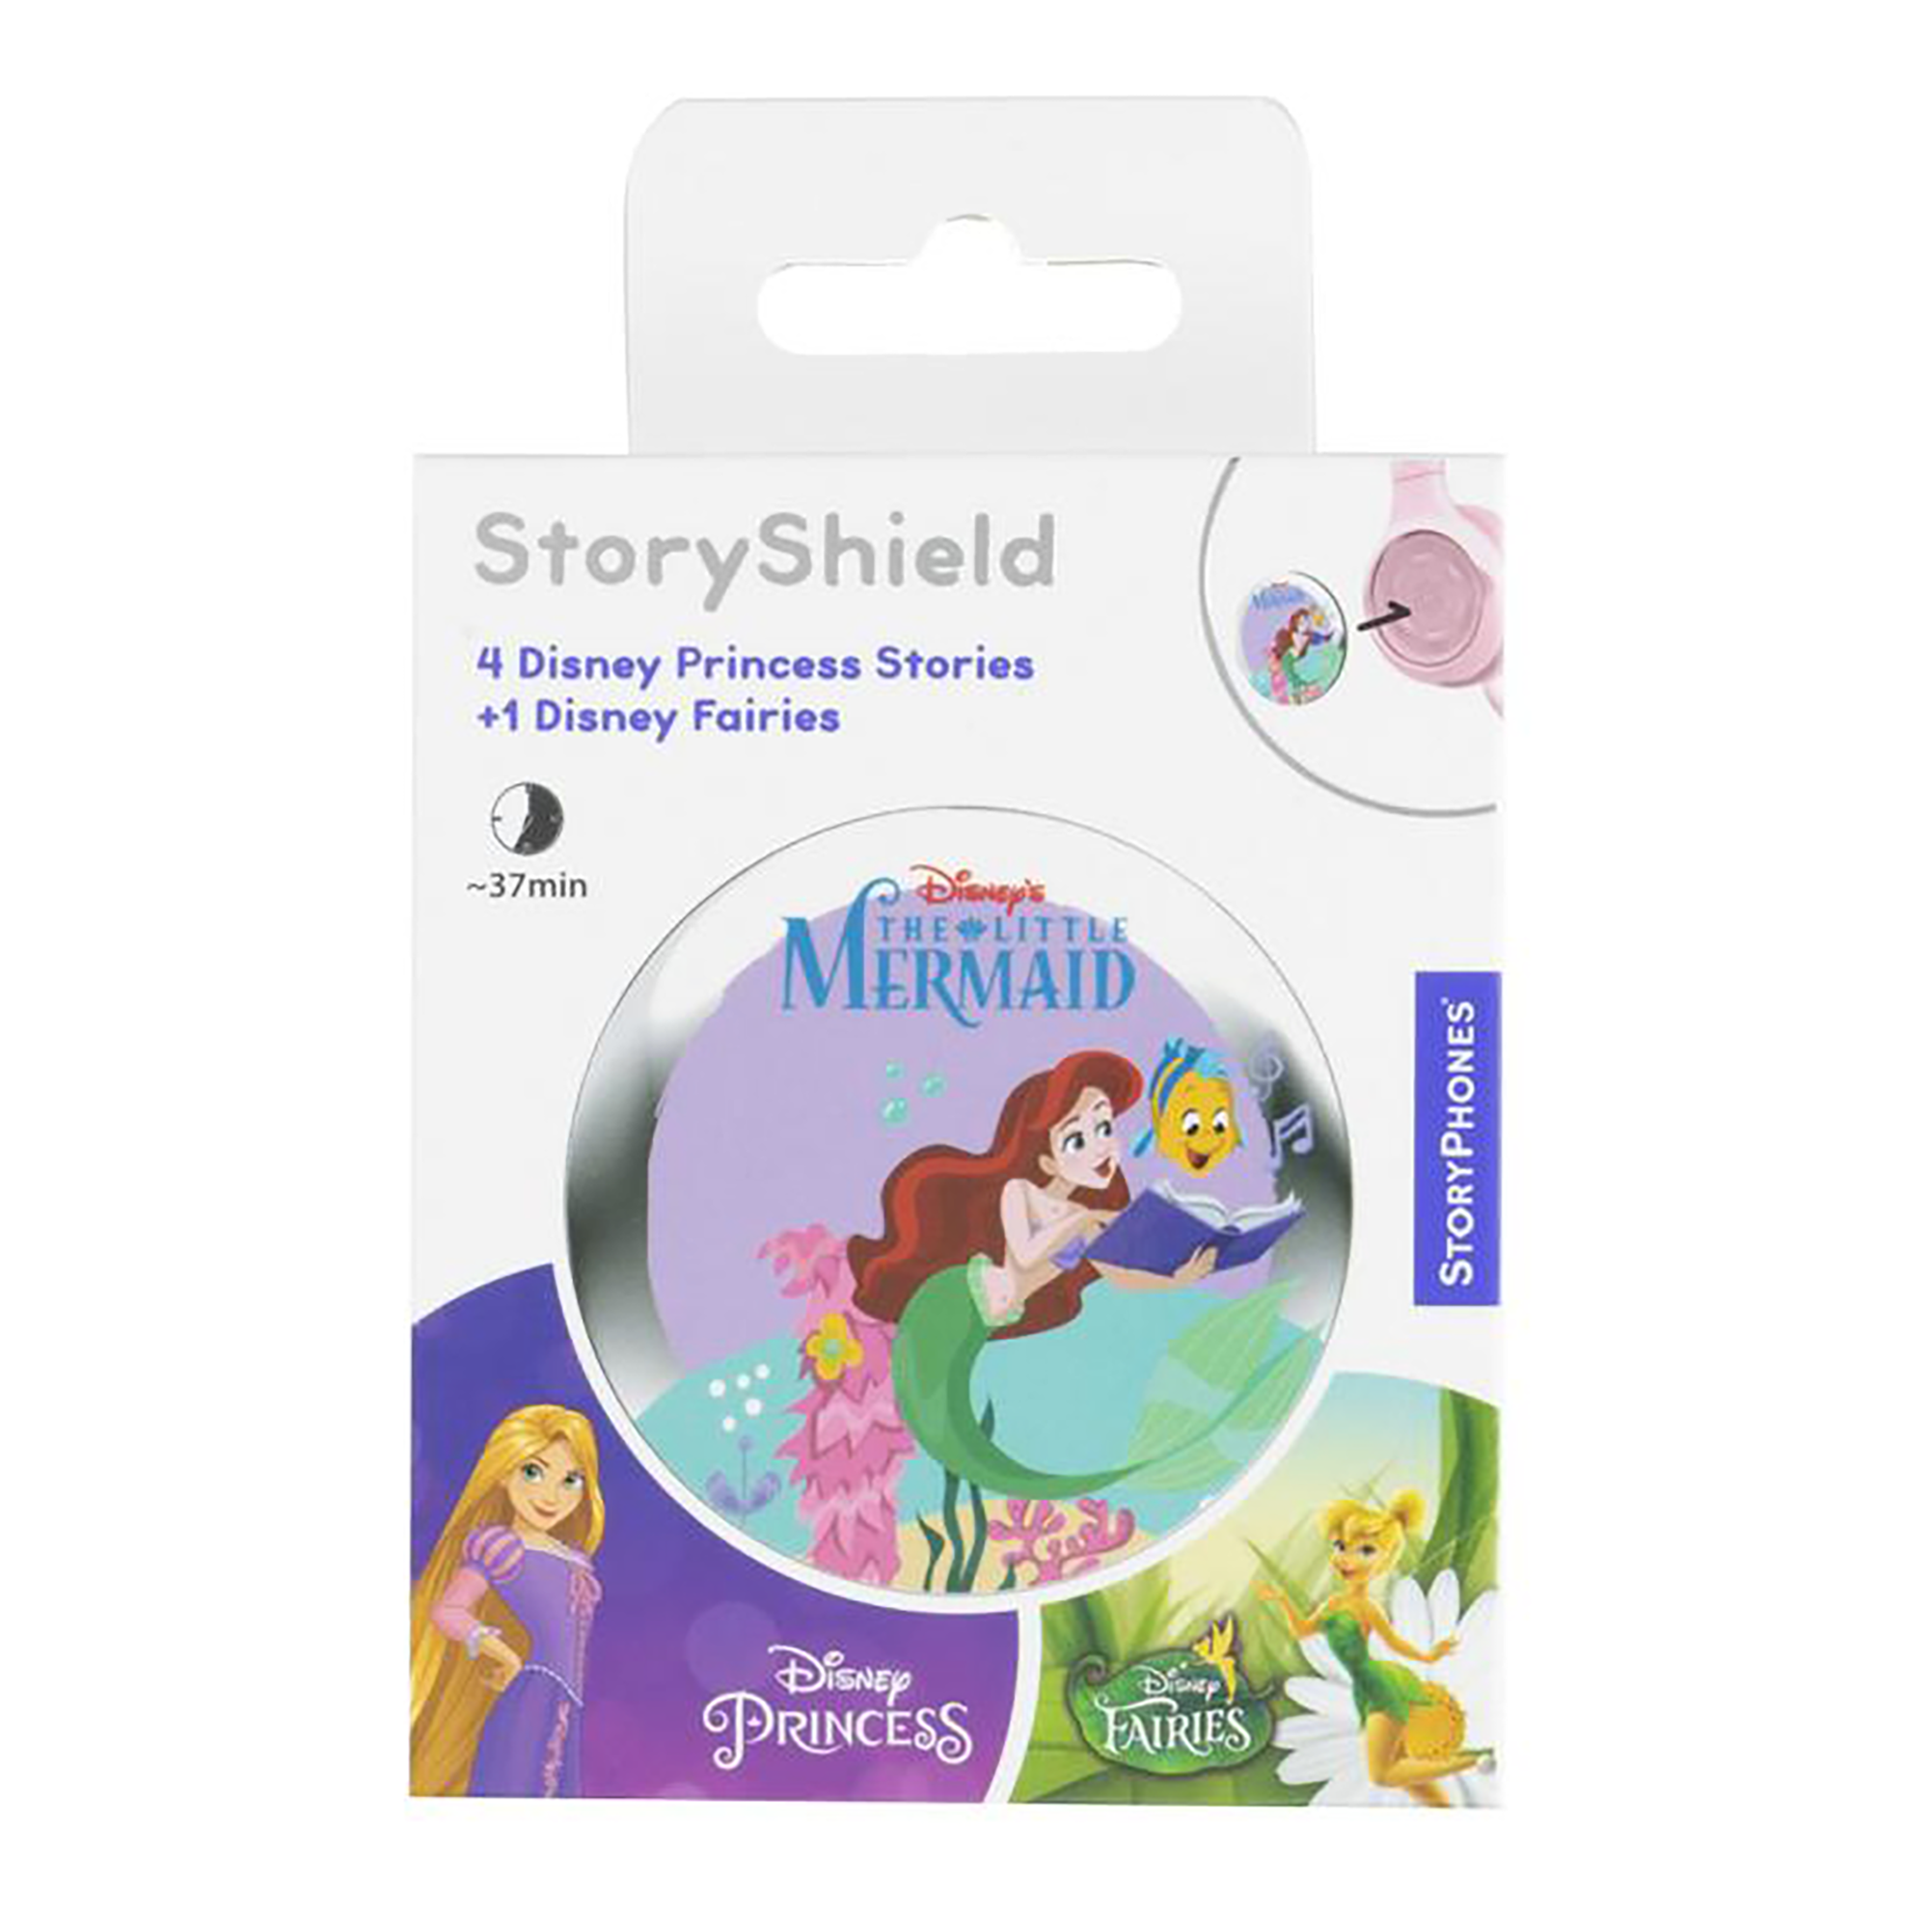 StoryShield Disney Collection - Arielle onanoff Rosa 2000583661009 2